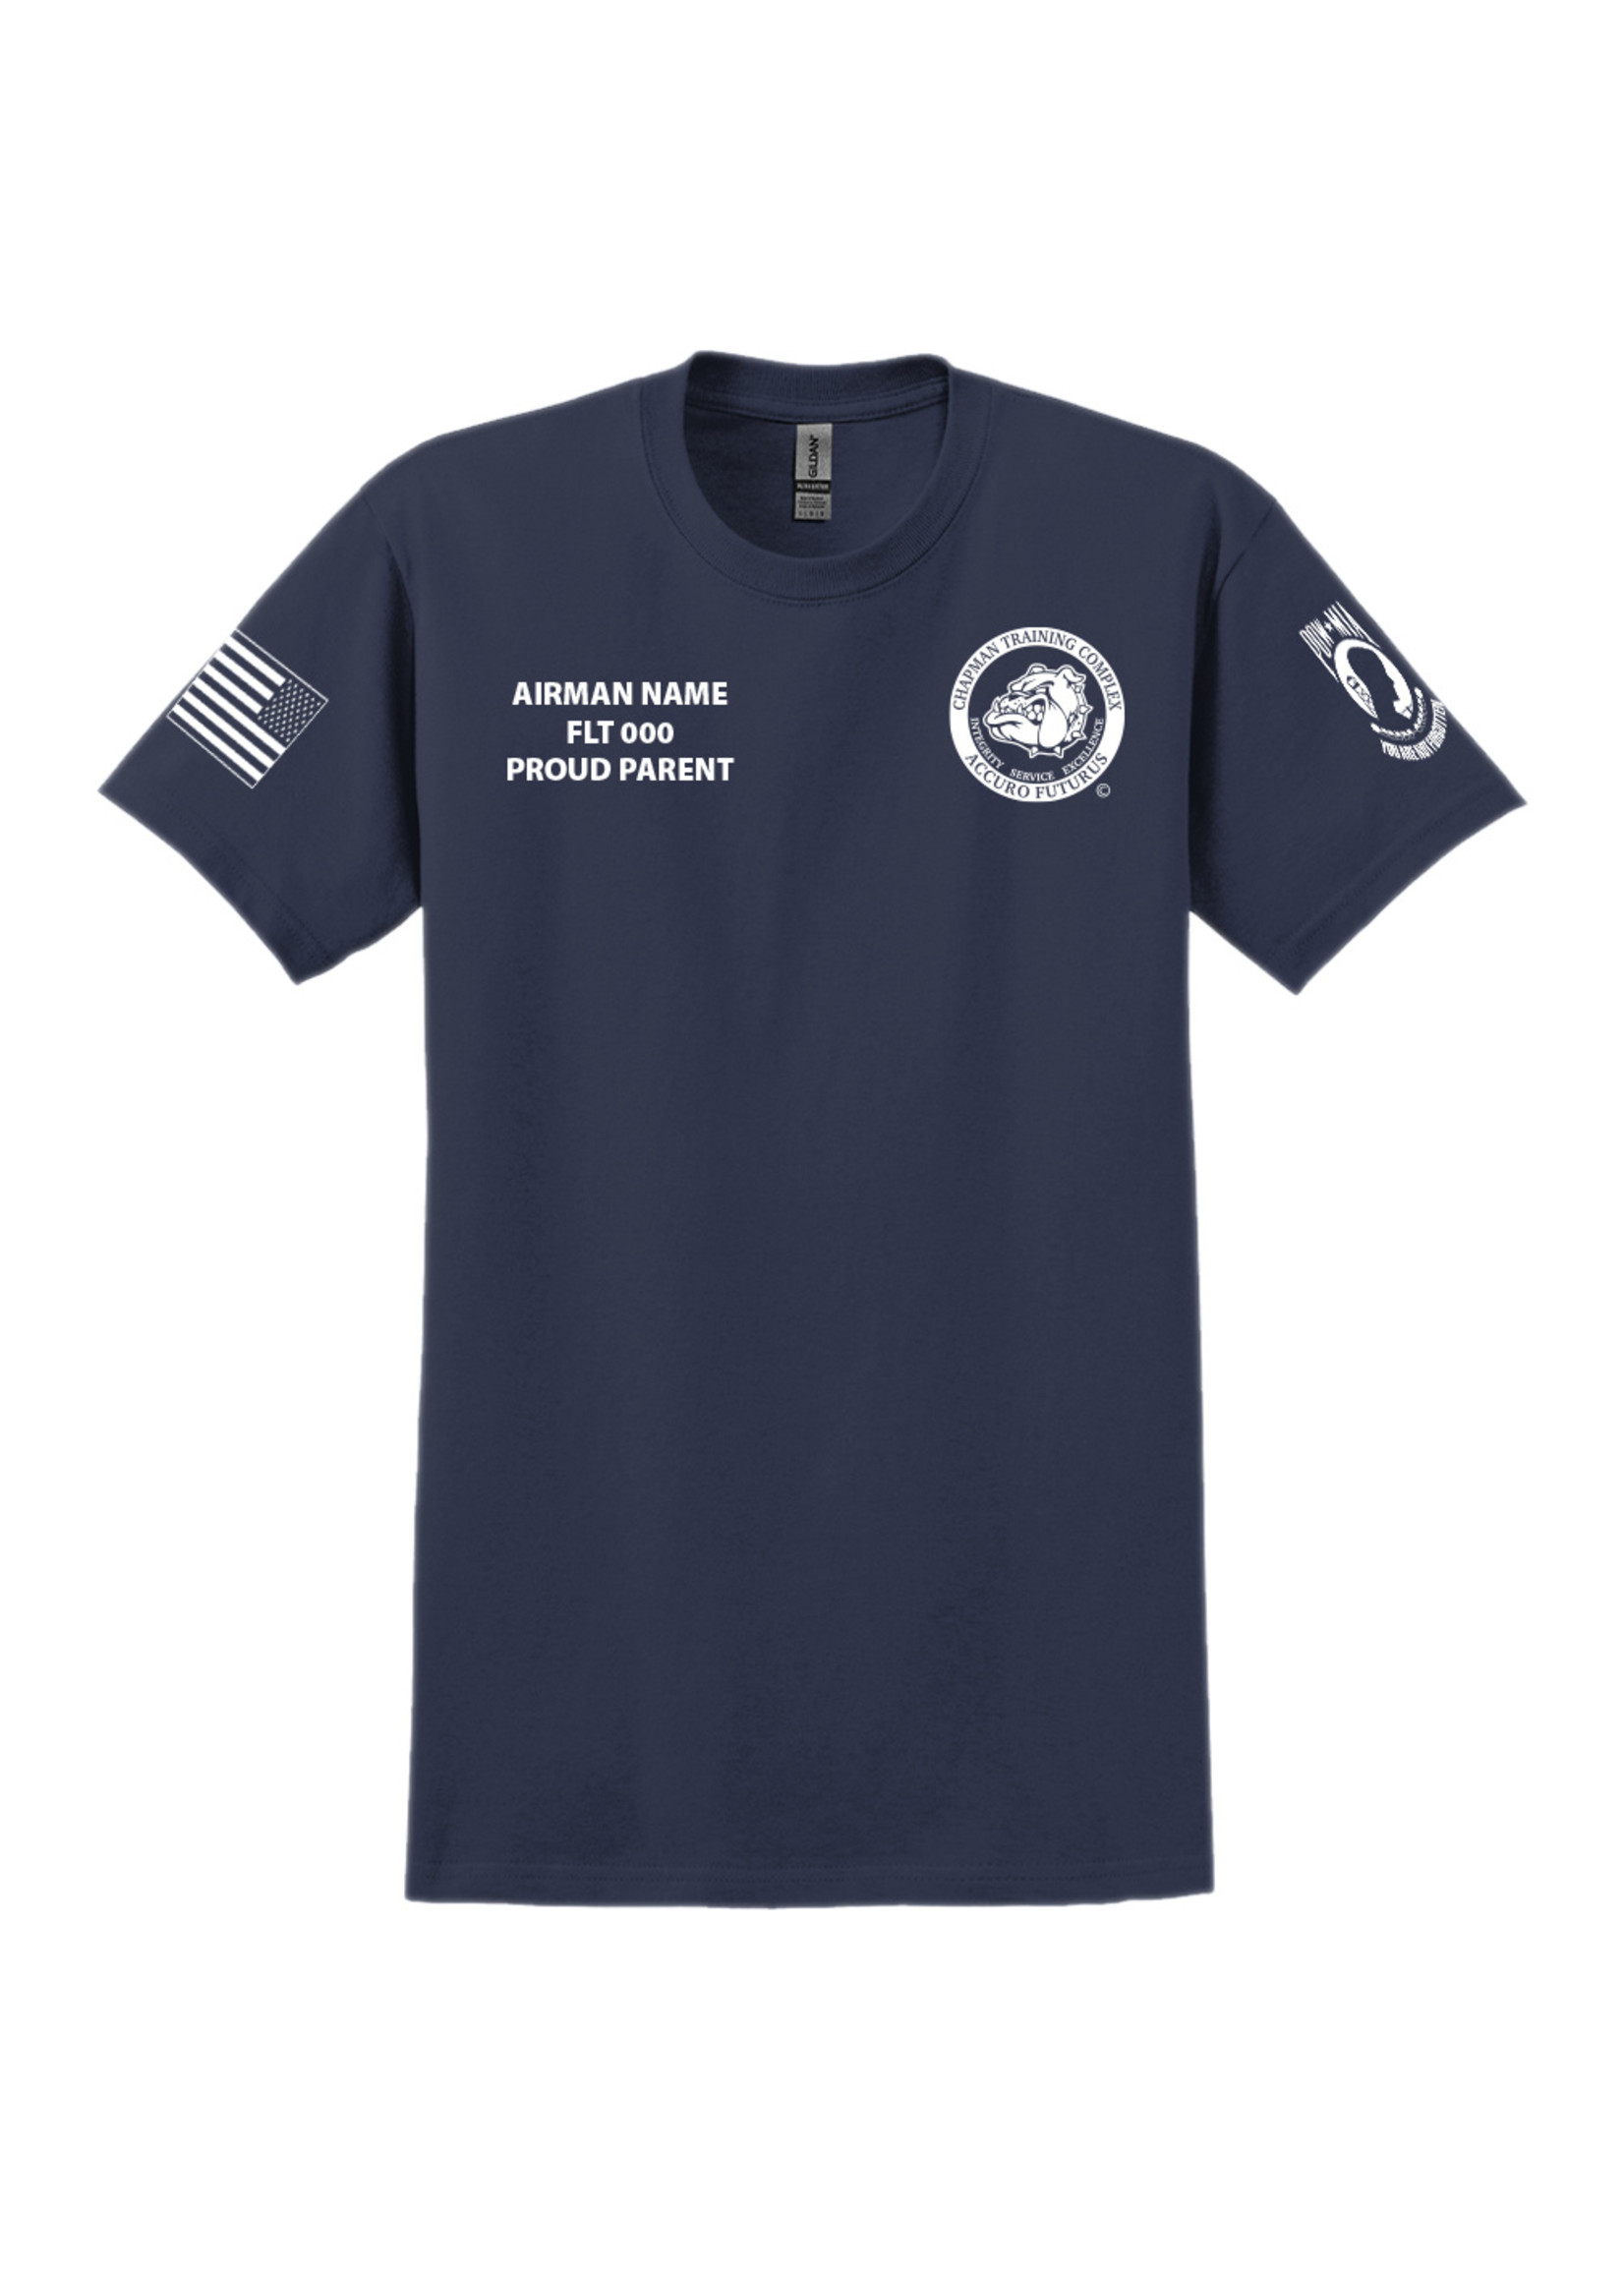 326th Bulldogs Cotton Shirt - Lackland Shirt Shop